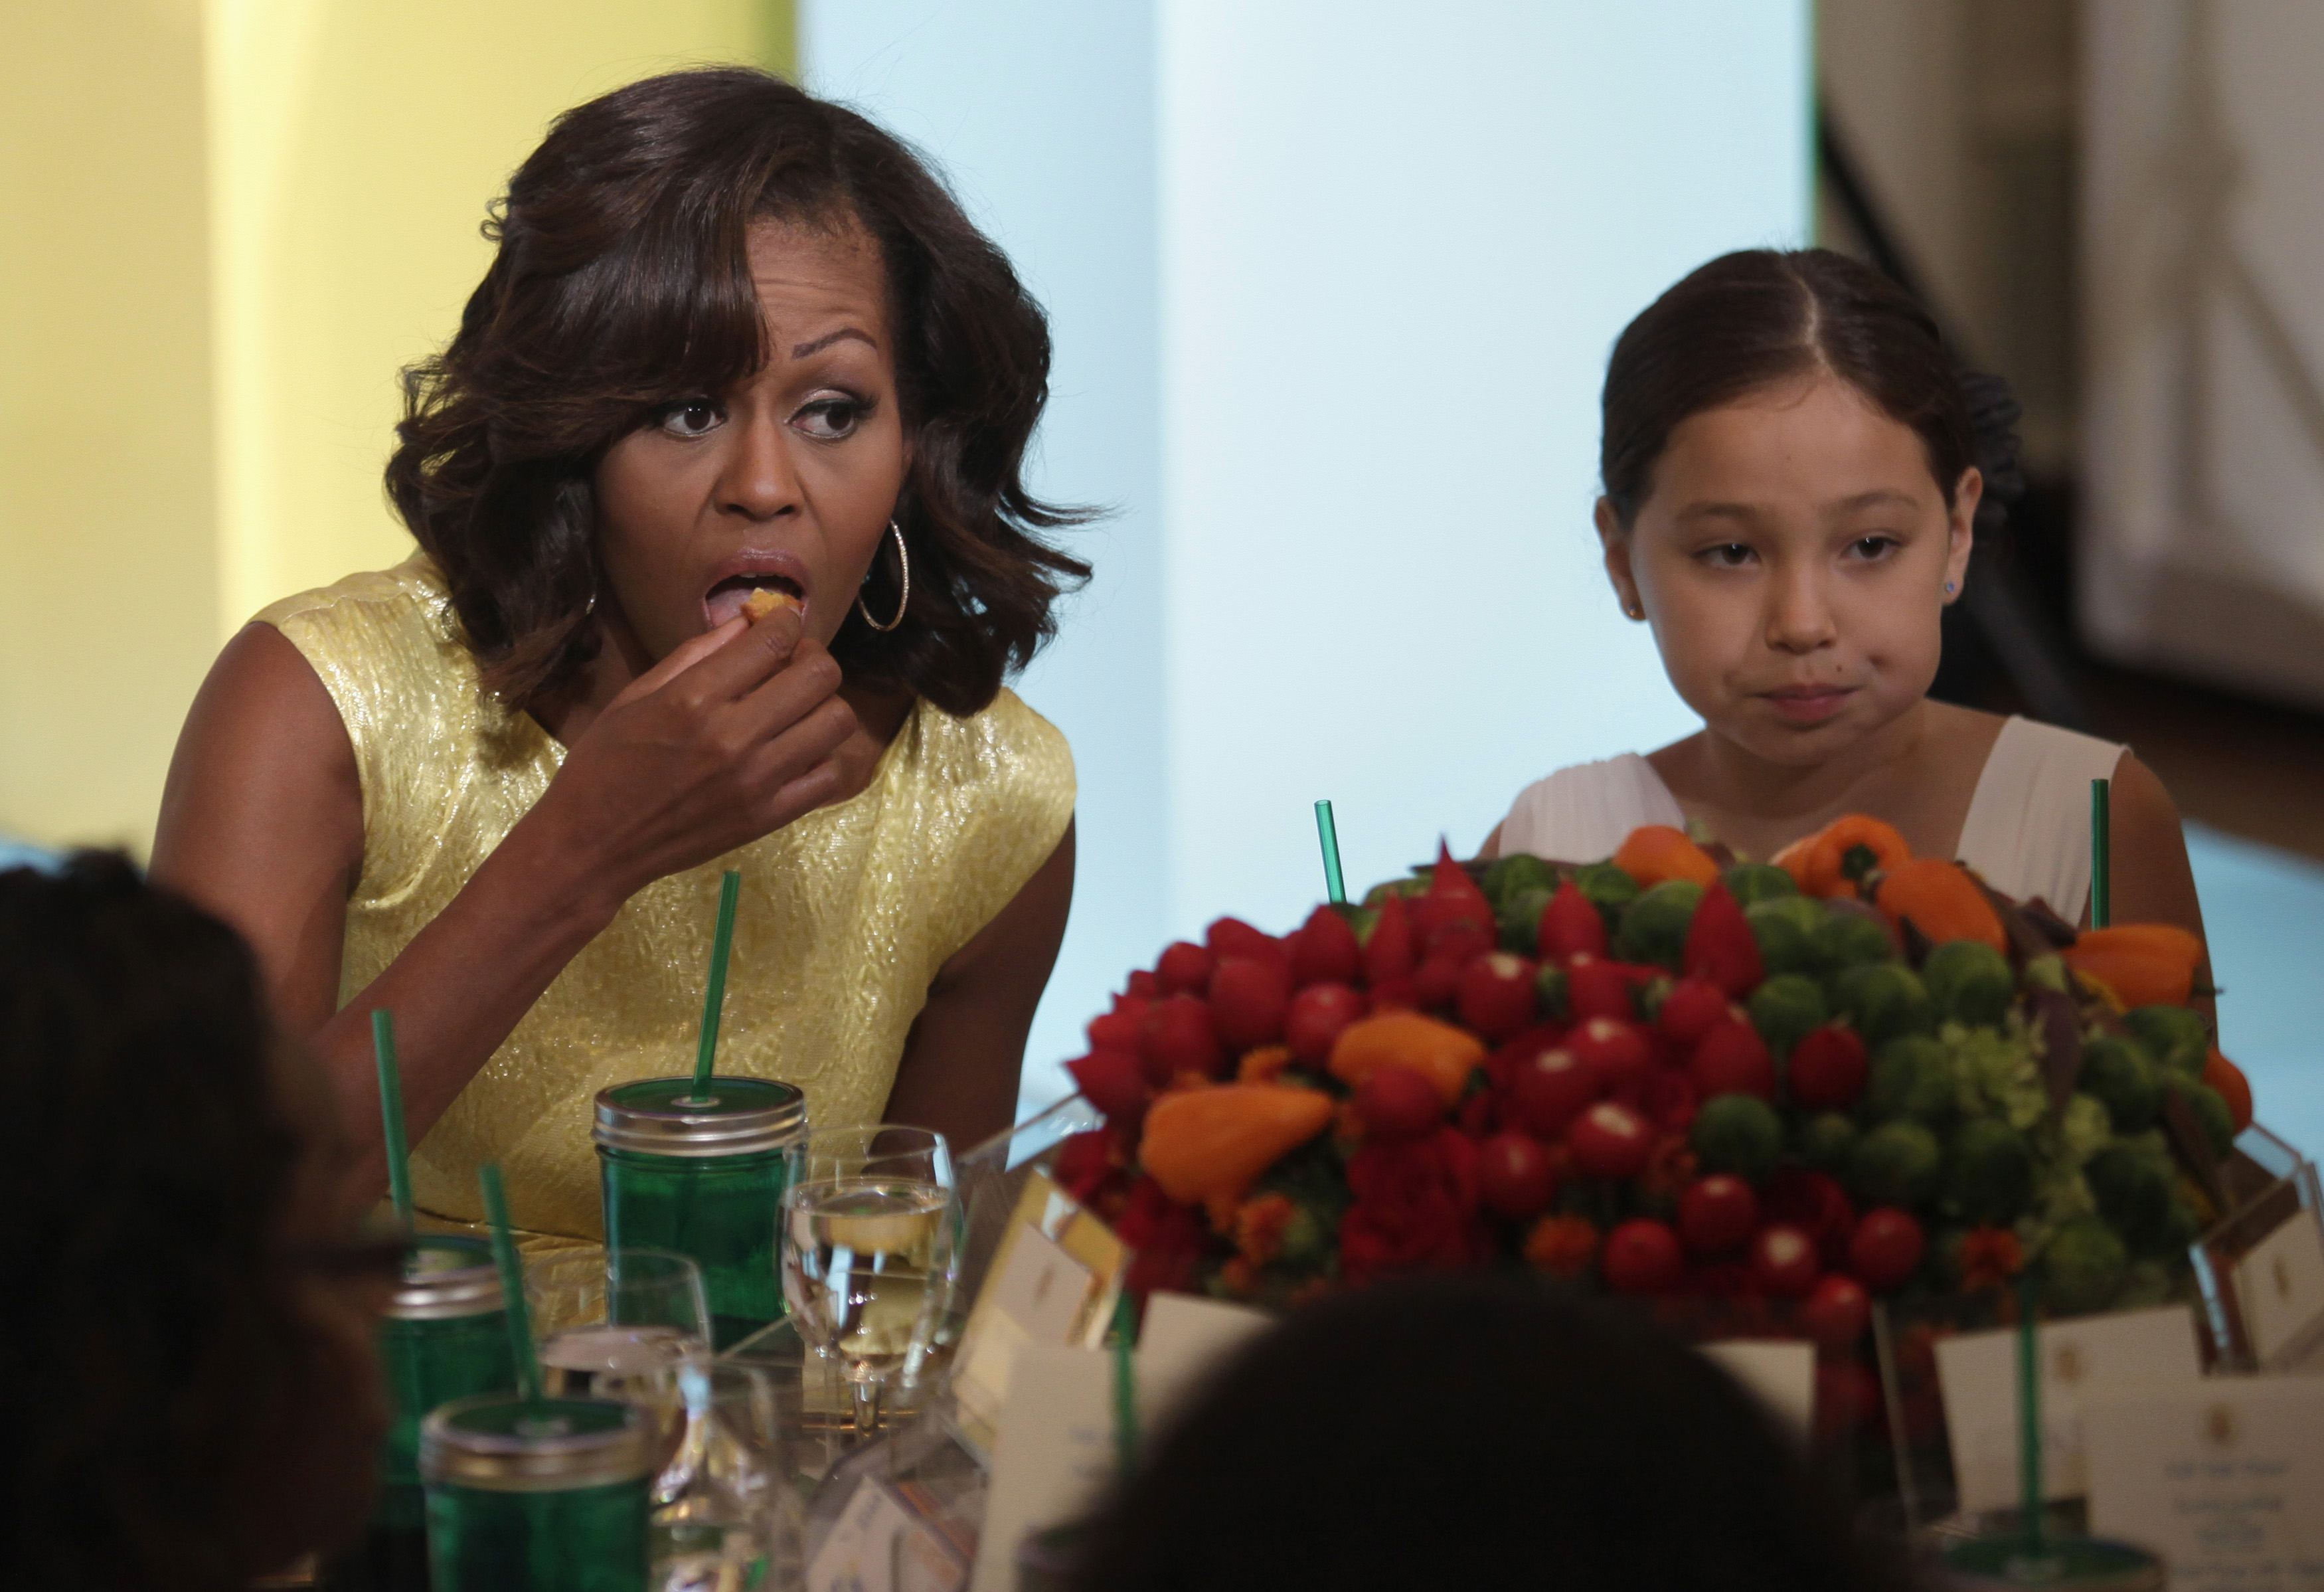 H Μισέλ Ομπαμα τρώει με όρεξη το ζαρζαβατικό της. Το κοριτσάκι δίπλα της; ΦΩΤΟ REUTERS